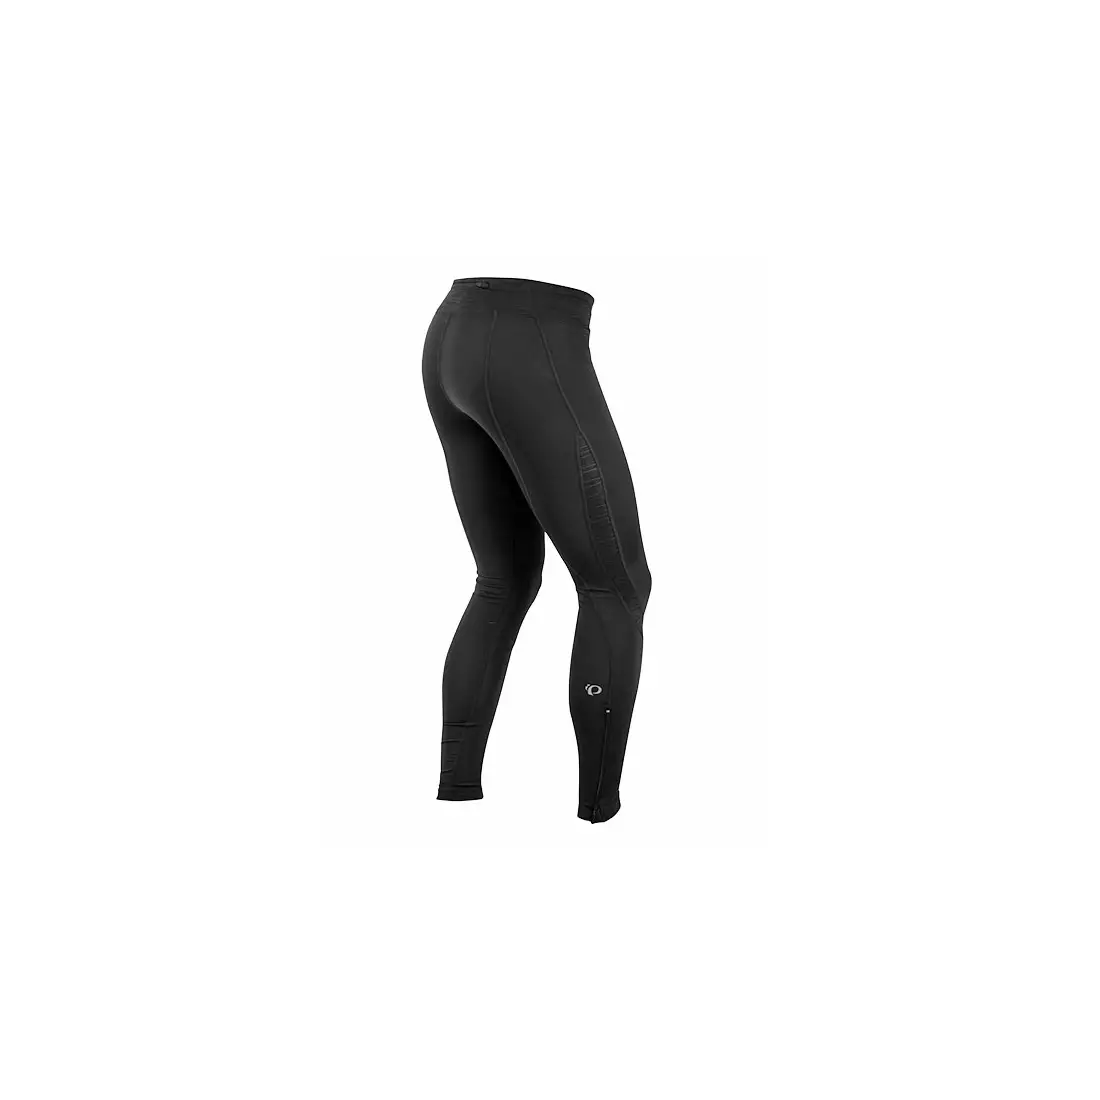 PEARL IZUMI RUN women's running pants FLY 12211407- 021, color: black